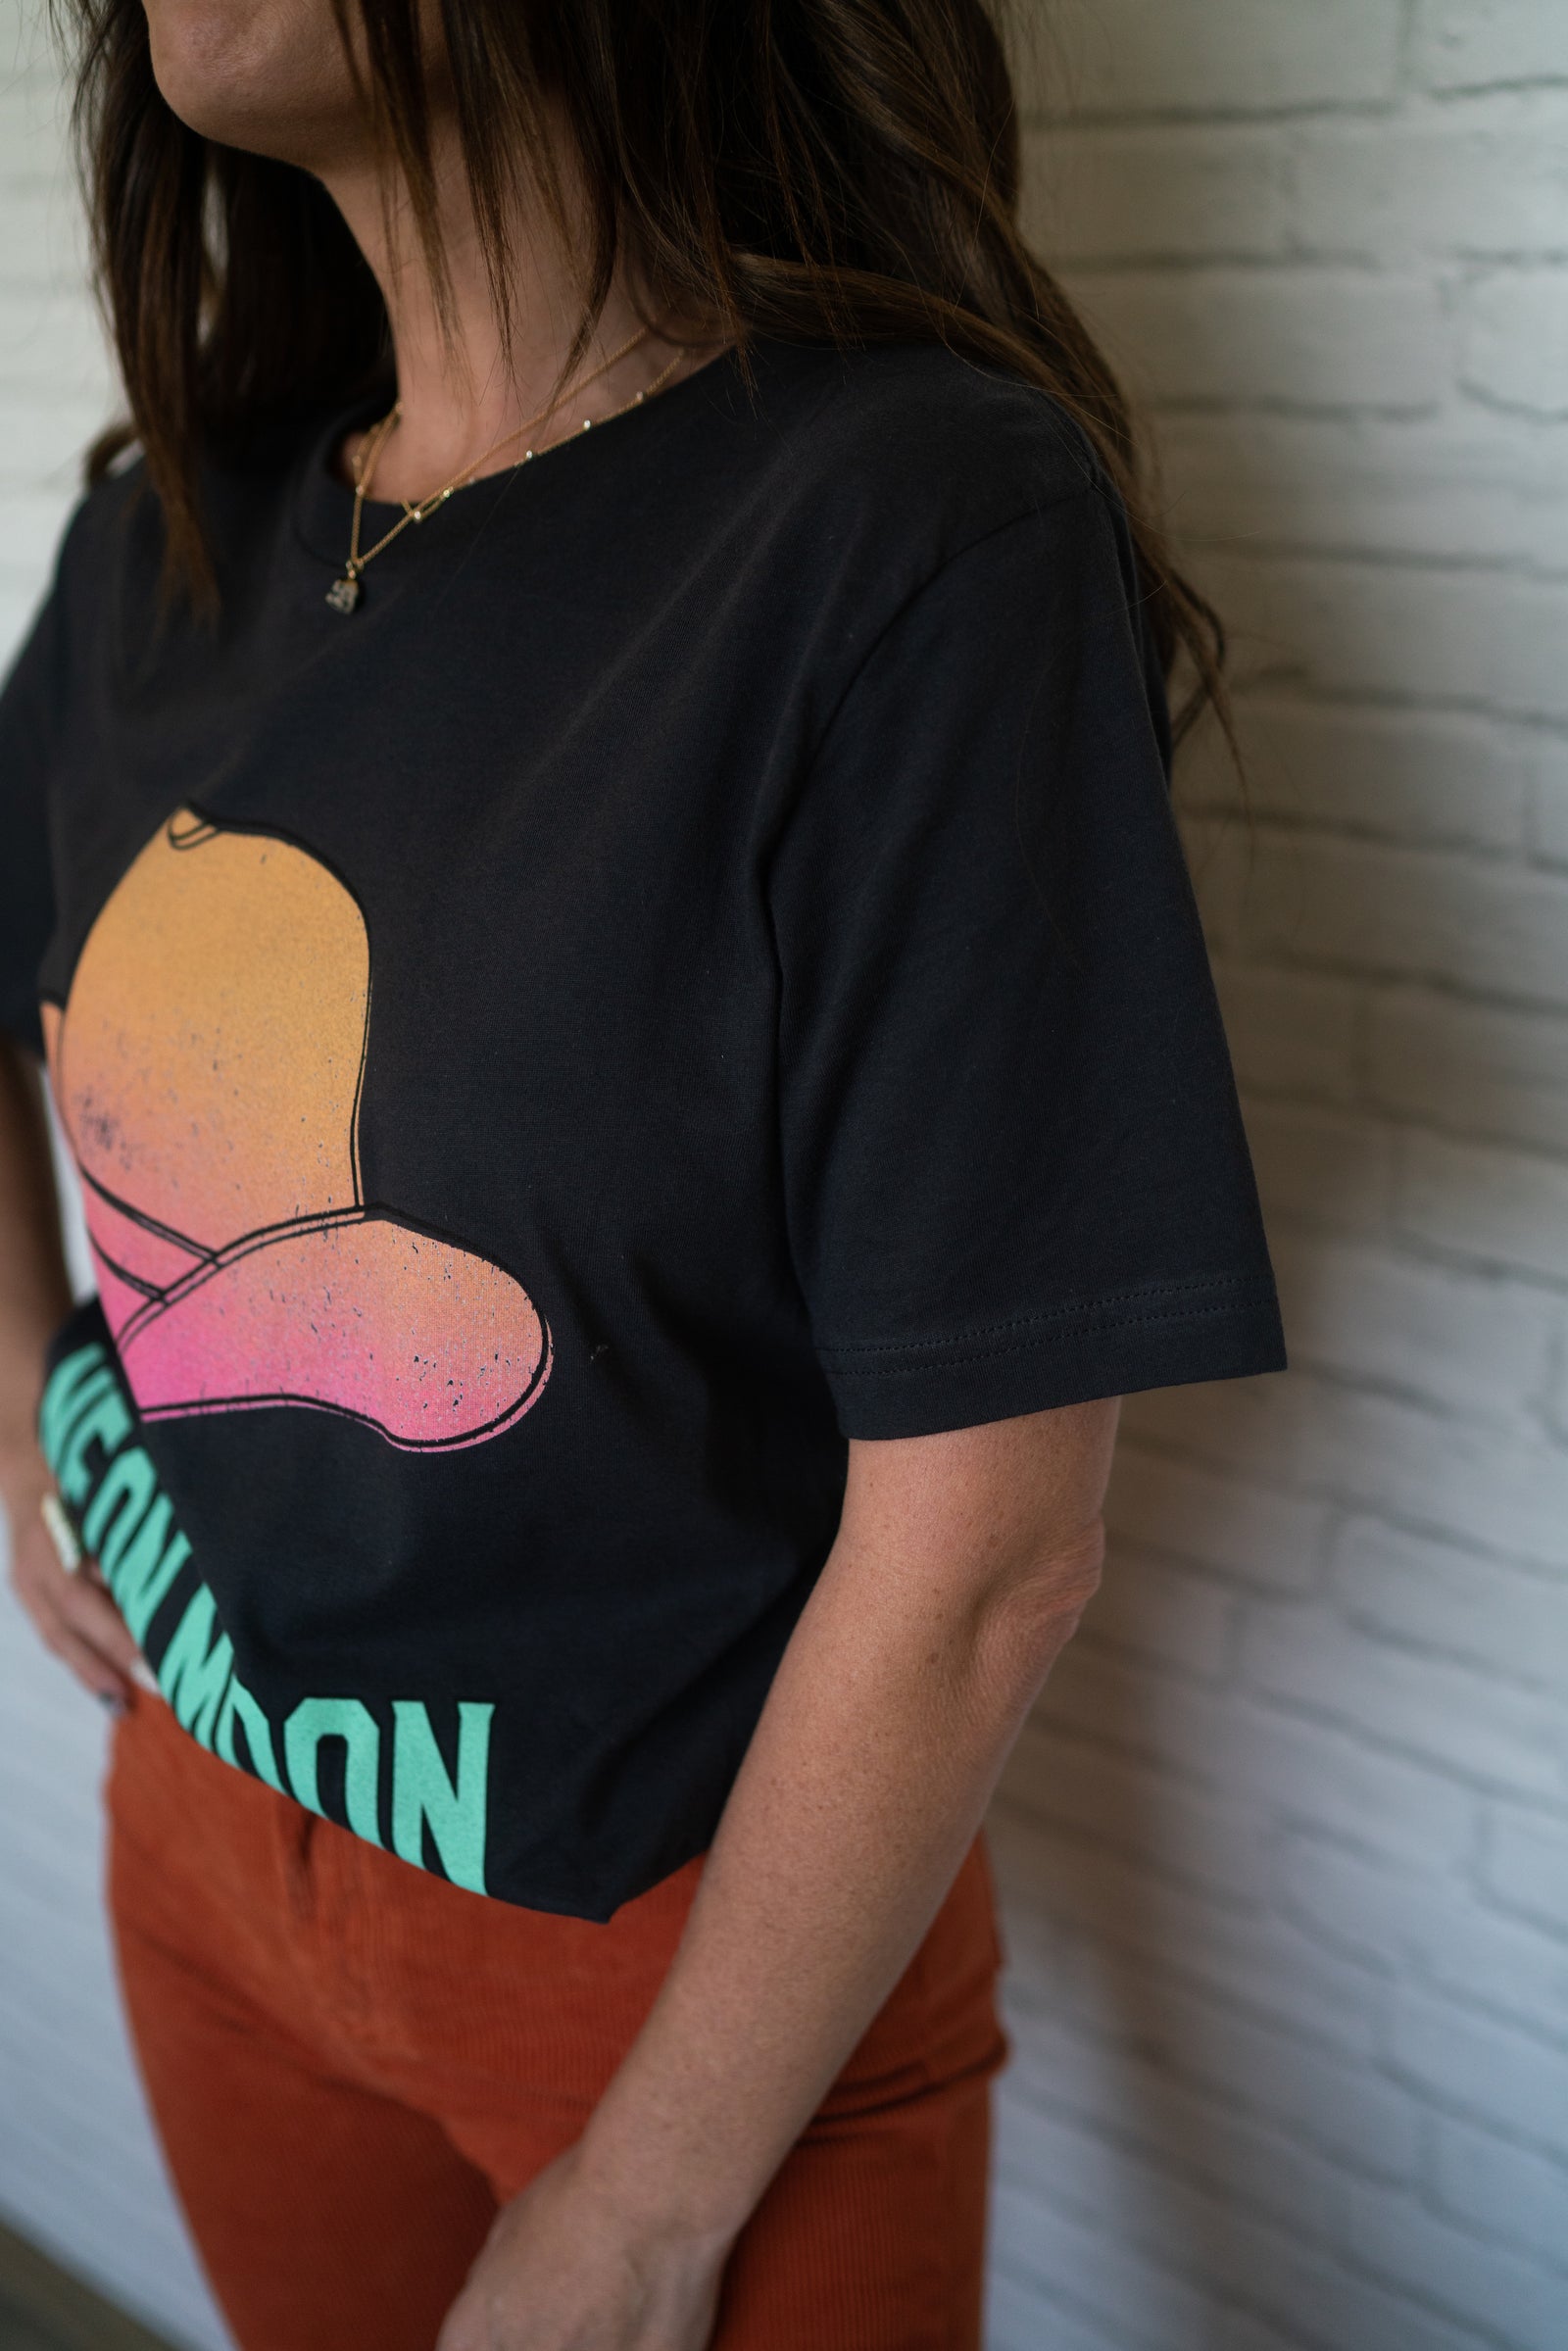 Neon Moon T-Shirt - FINAL SALE